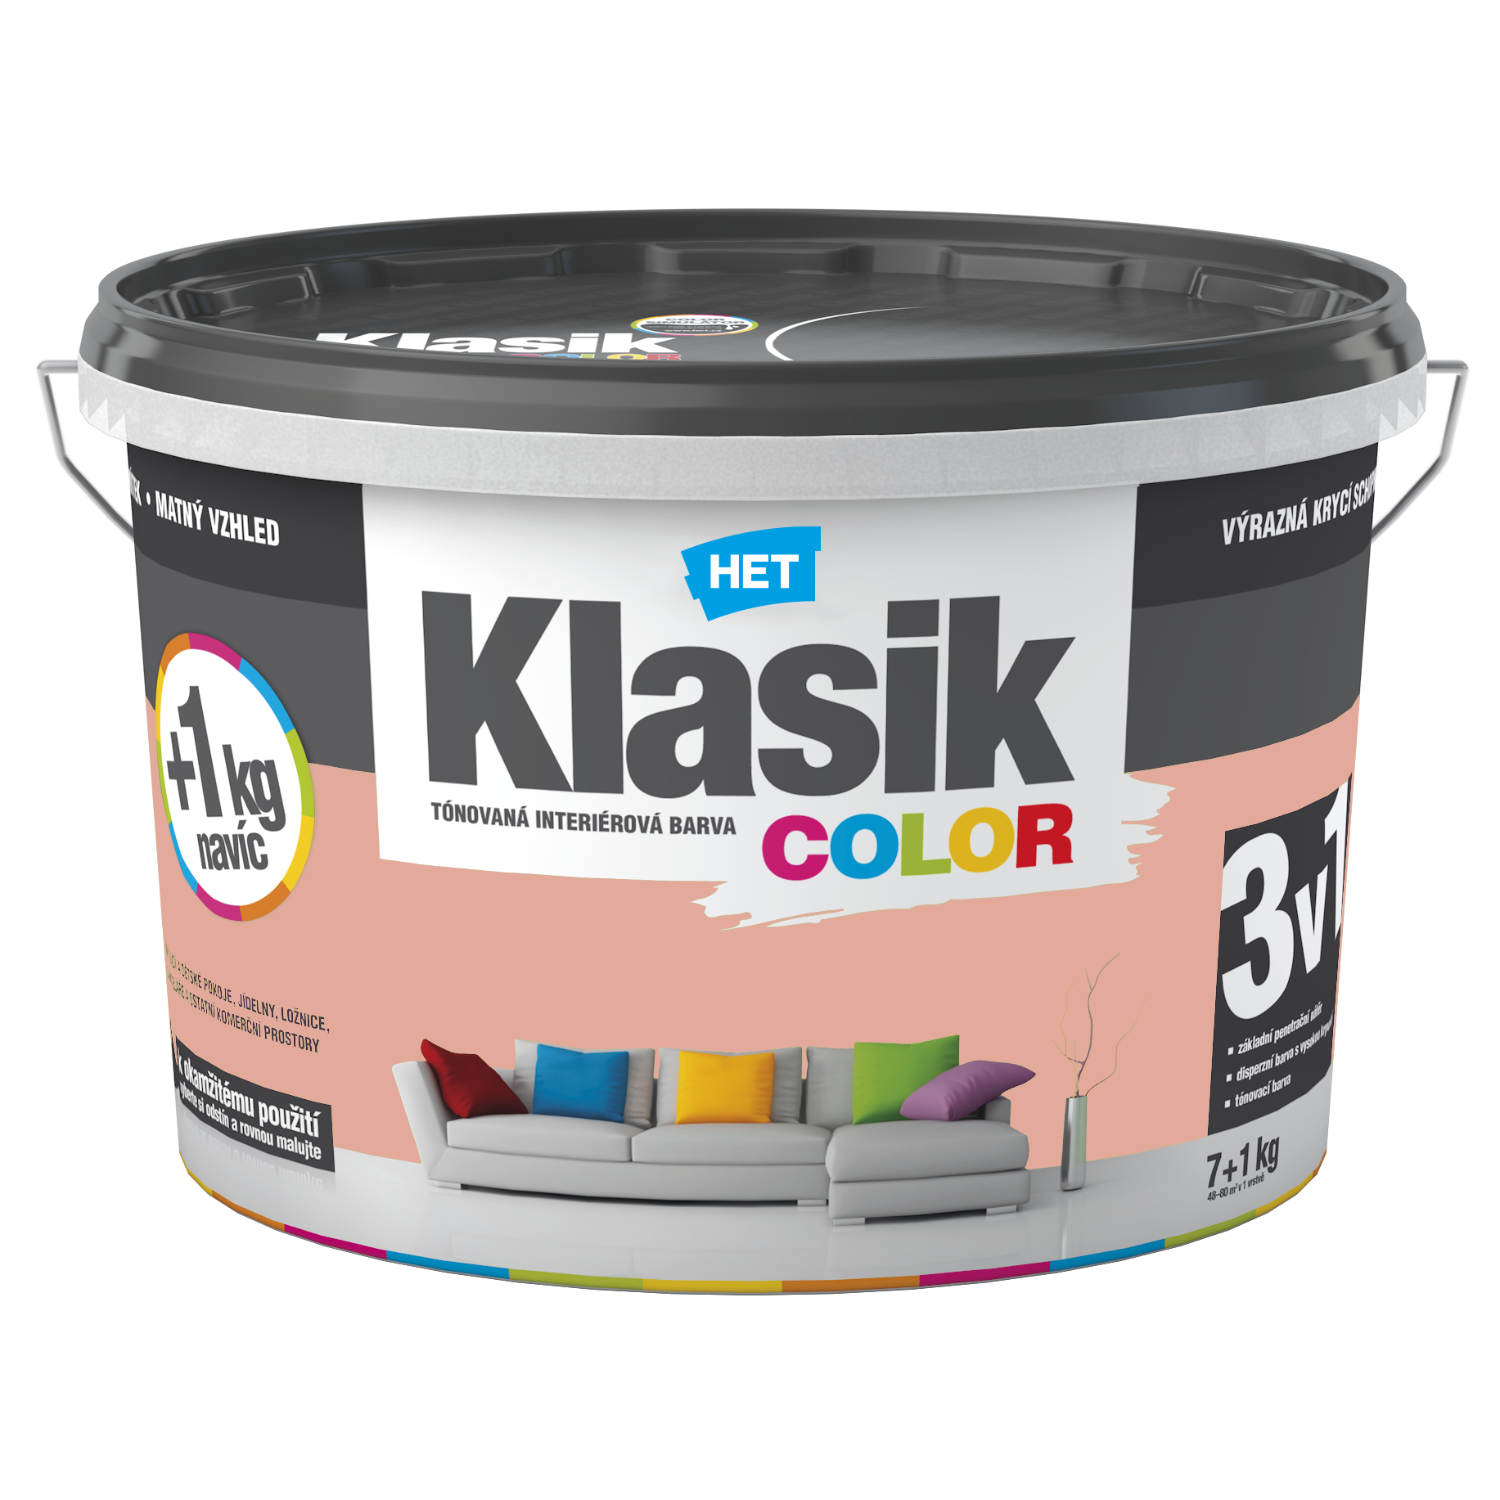 HET Klasik COLOR tónovaná interiérová akrylátová disperzná oteruvzdorná farba 7 kg + 1 kg zdarma, KC0828 - lososový